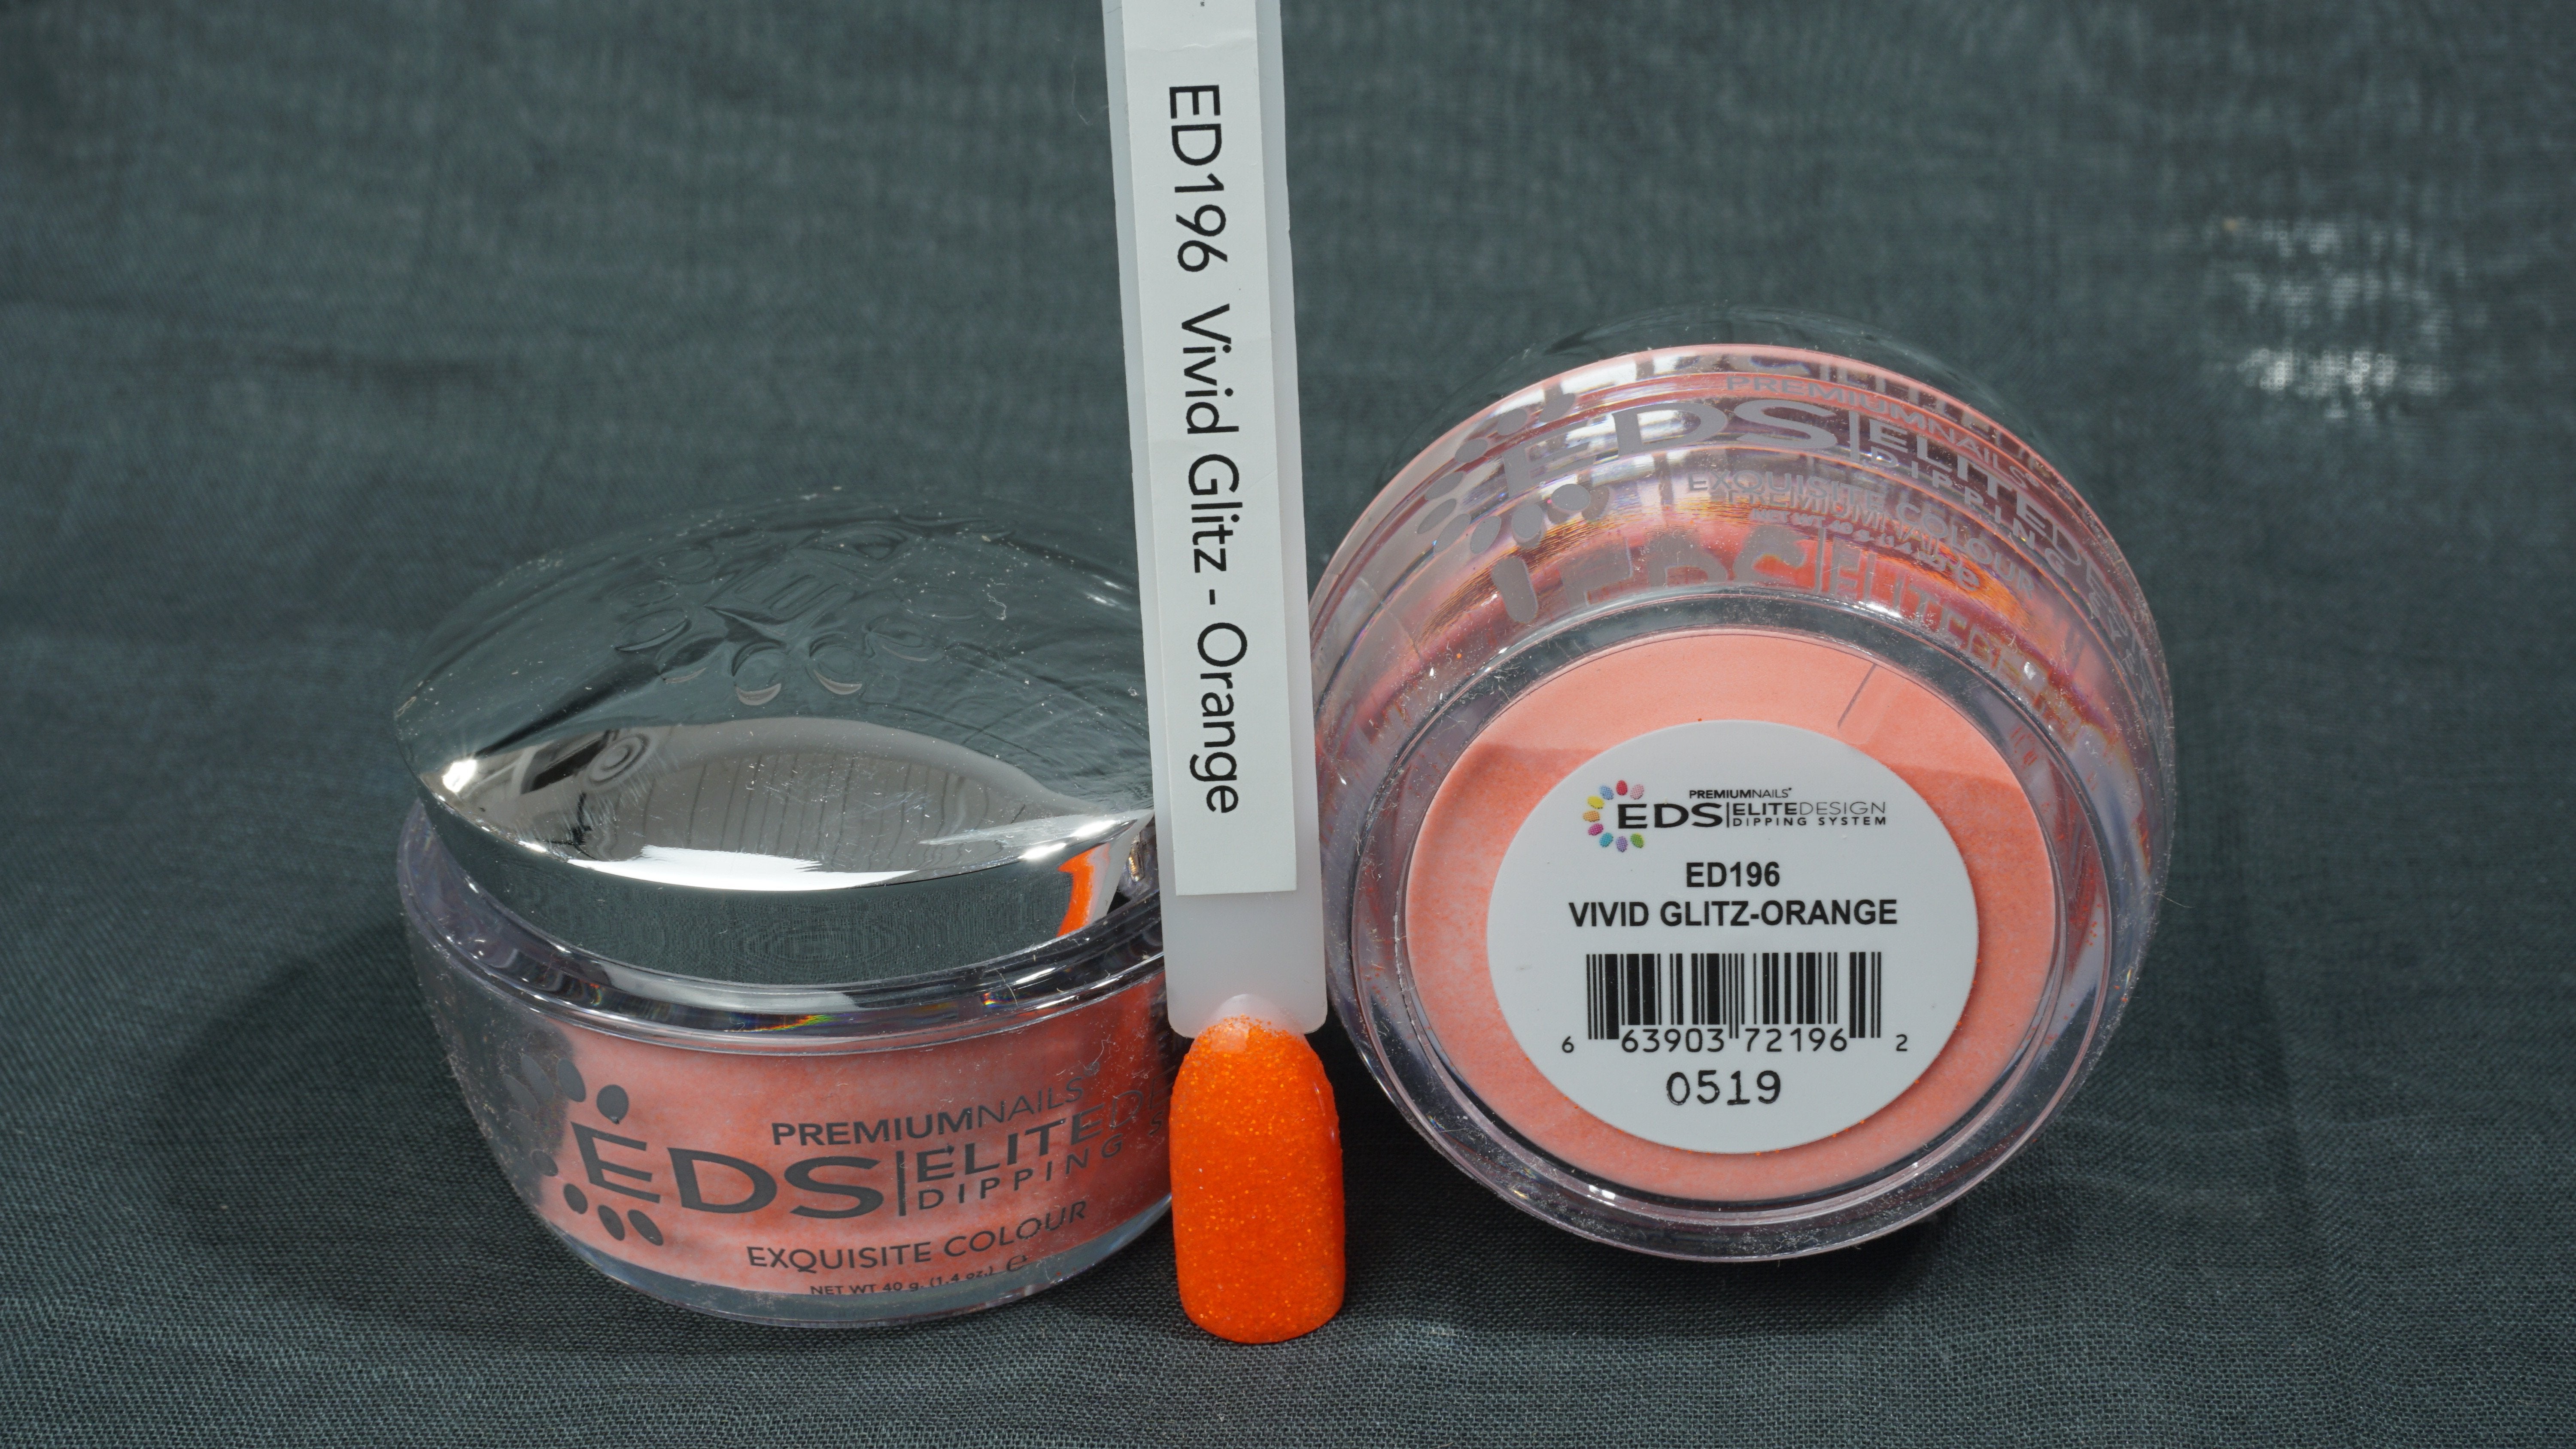 ED196 Vivid Glitz-Orange 40 g - ELITEDESIGN PREMIUM NAILS Dip Powder